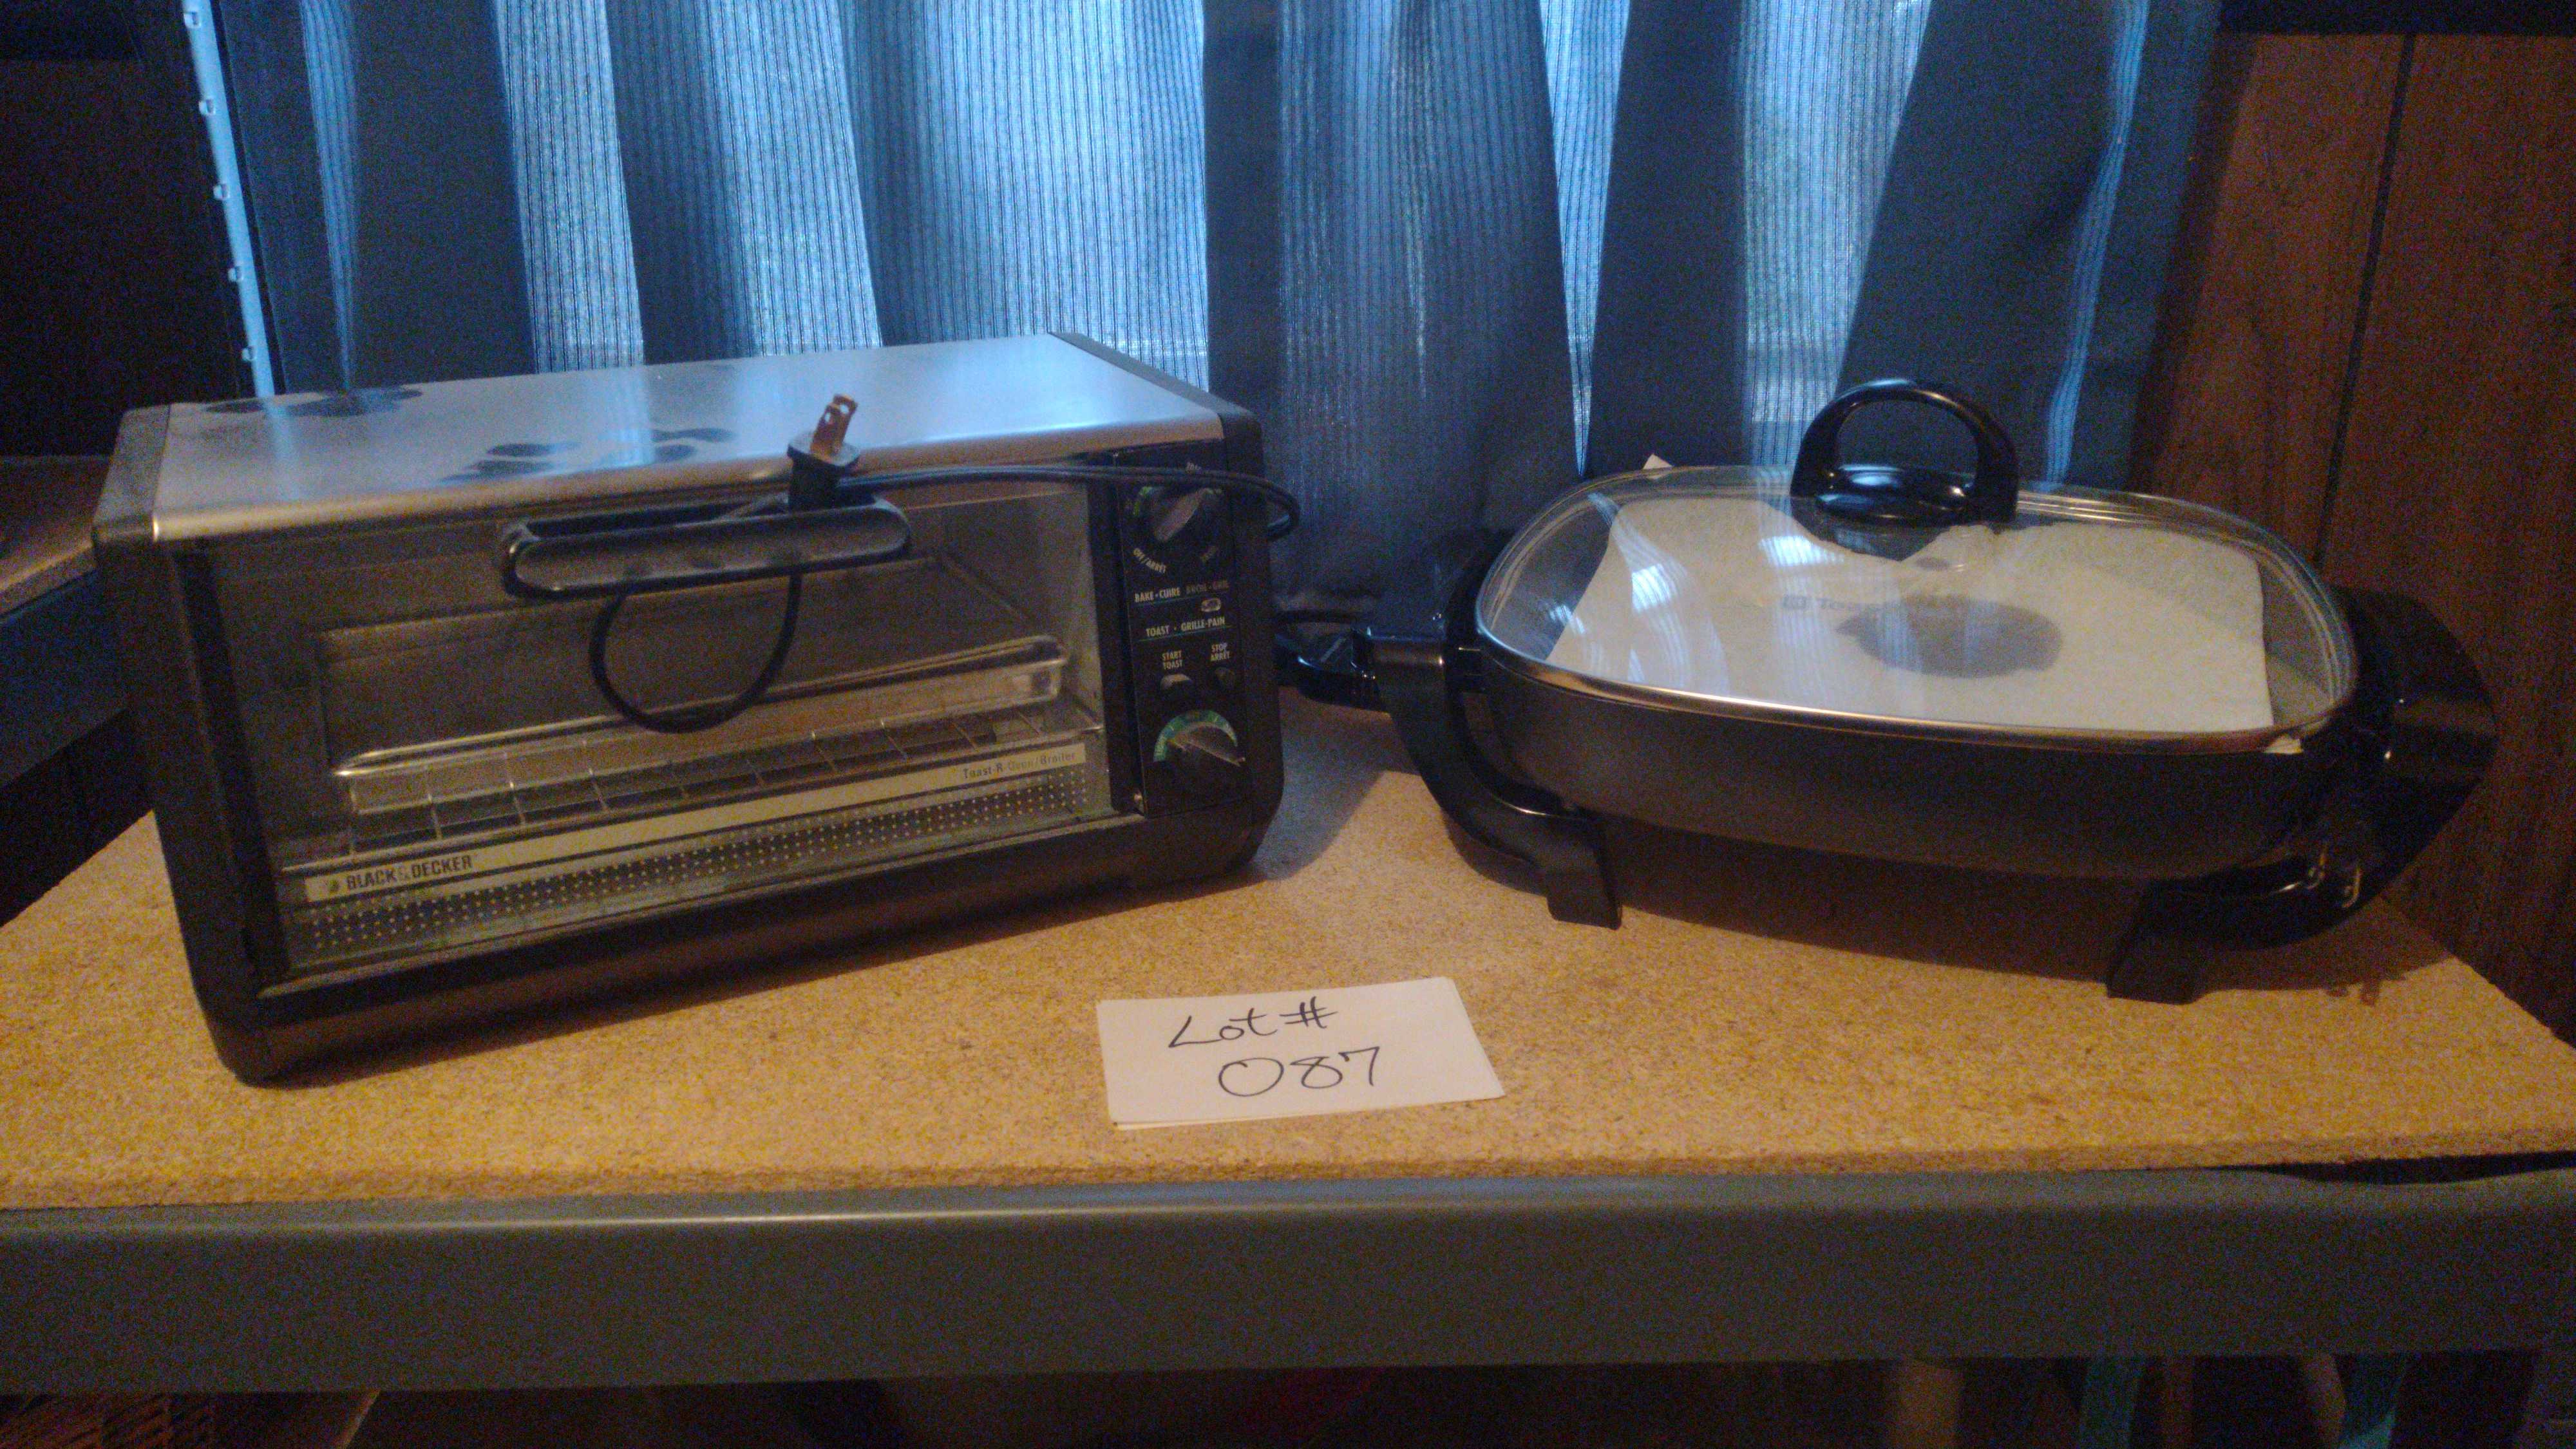 Chicago Metallic Non-Stick Toaster Oven Bakeware Set - Moss